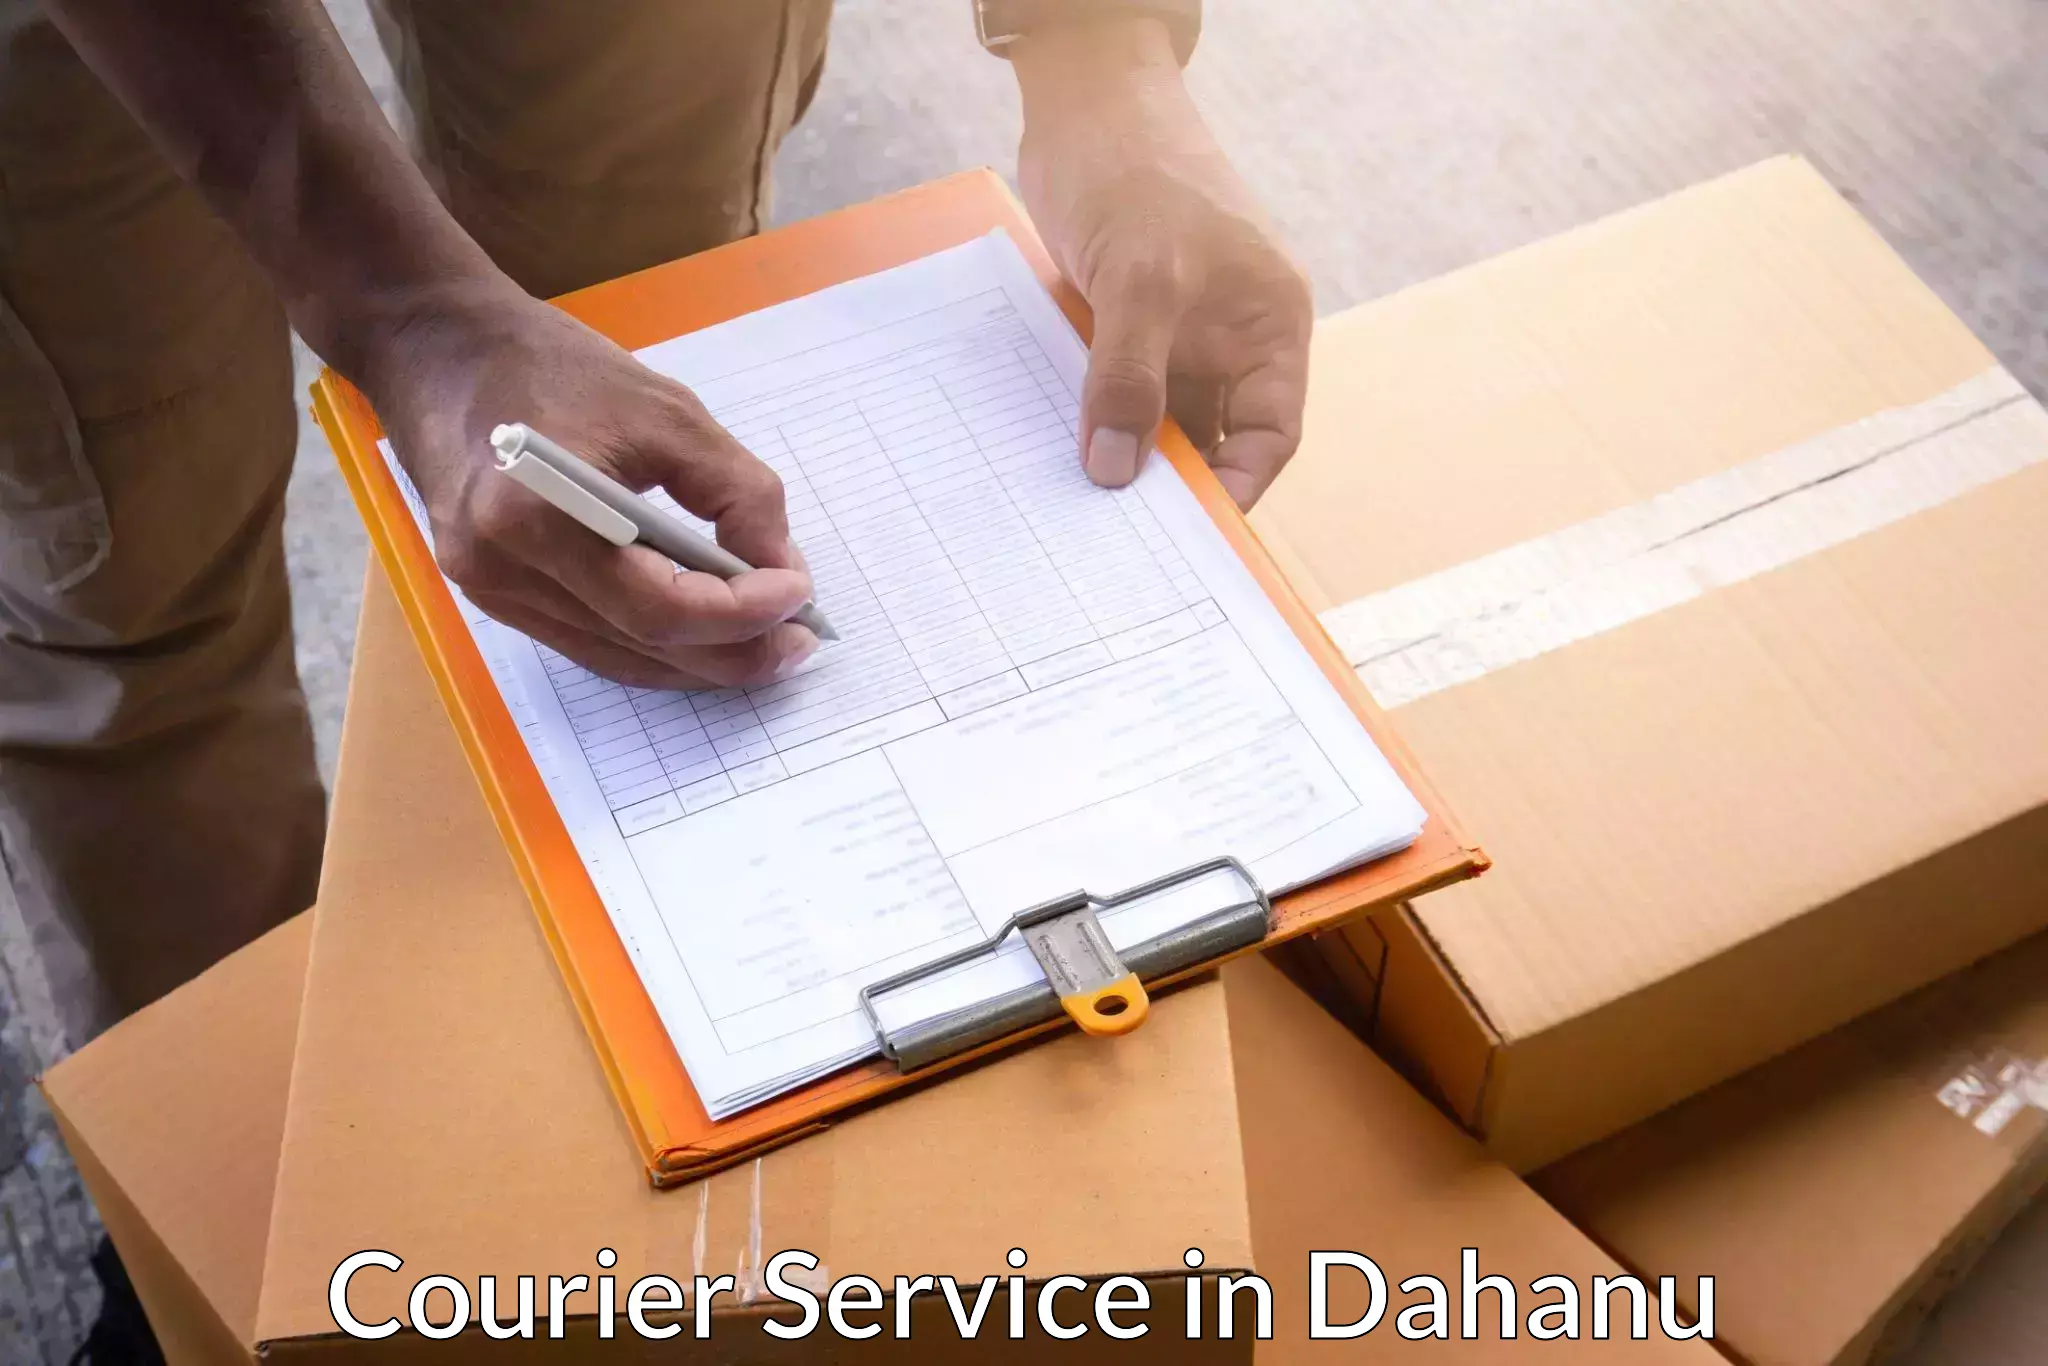 Courier service efficiency in Dahanu